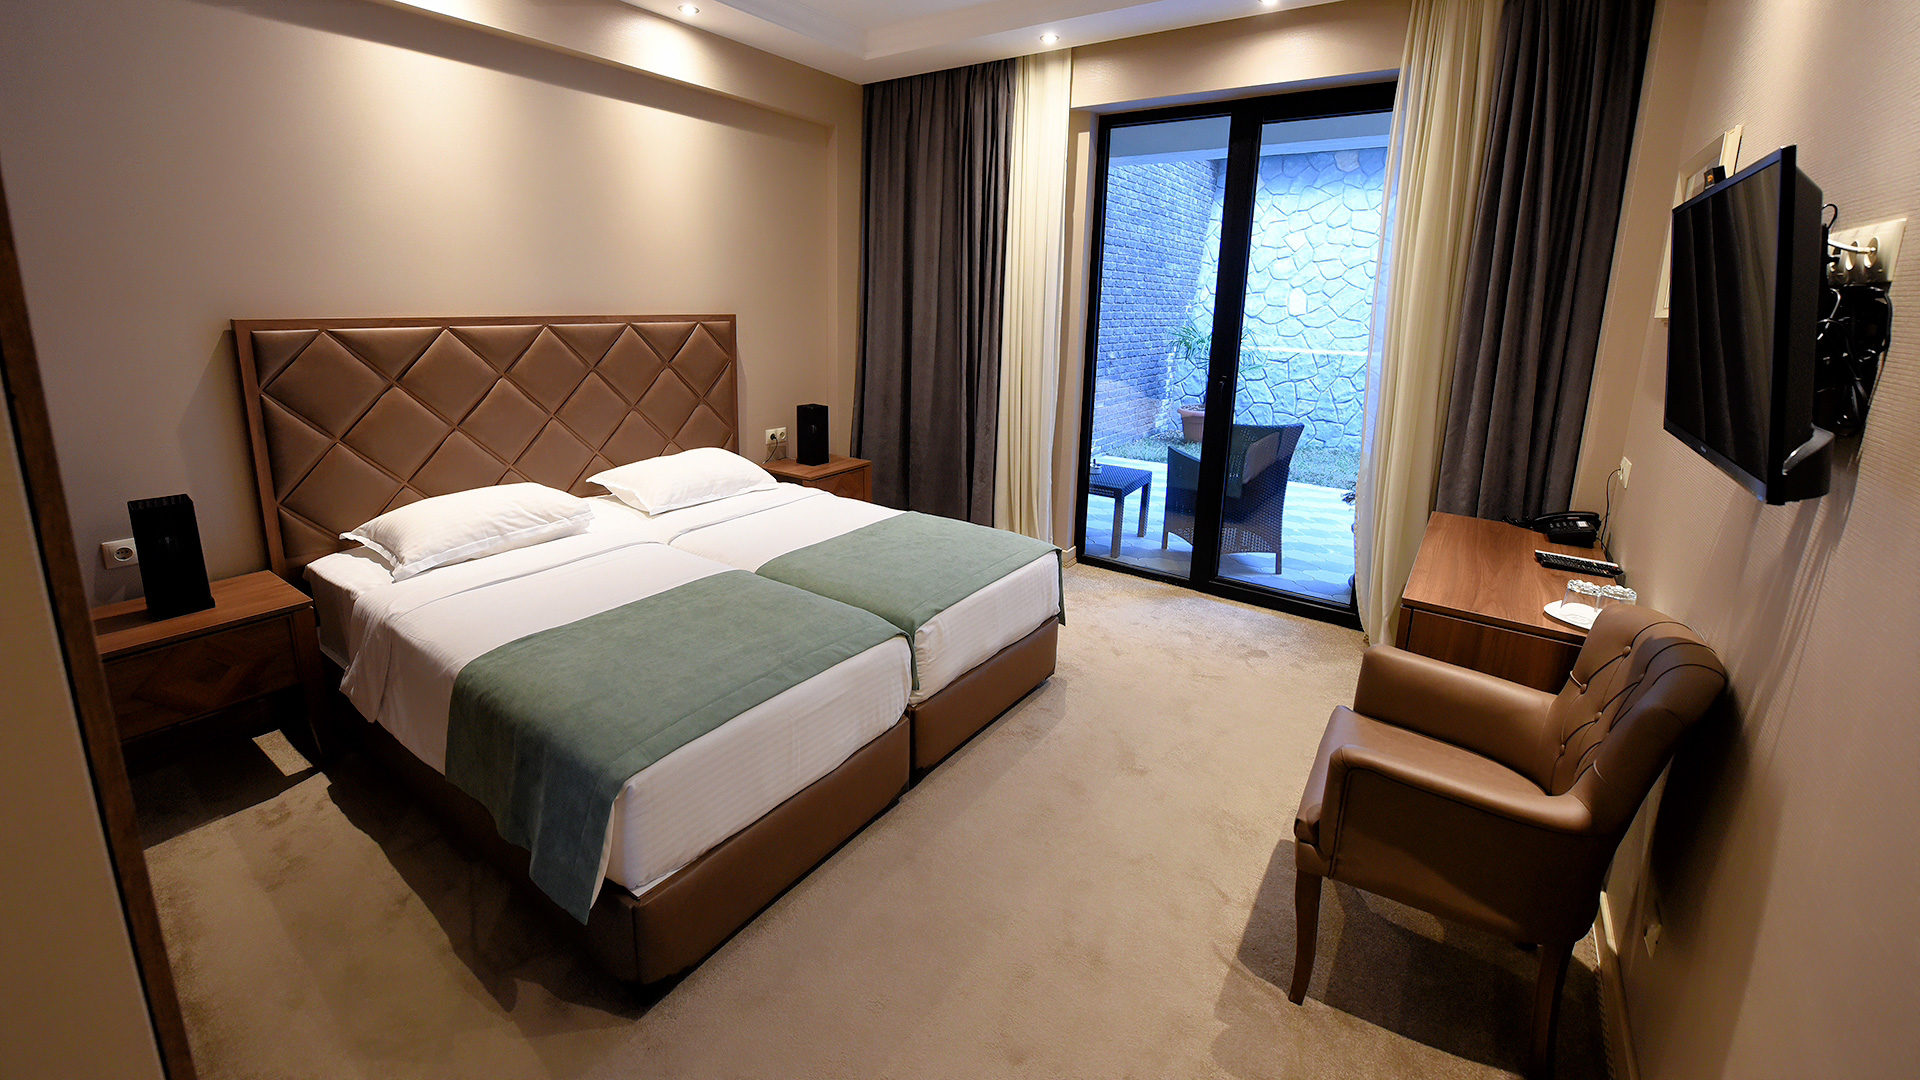 Economy room of the Grand hotel "Mimino"